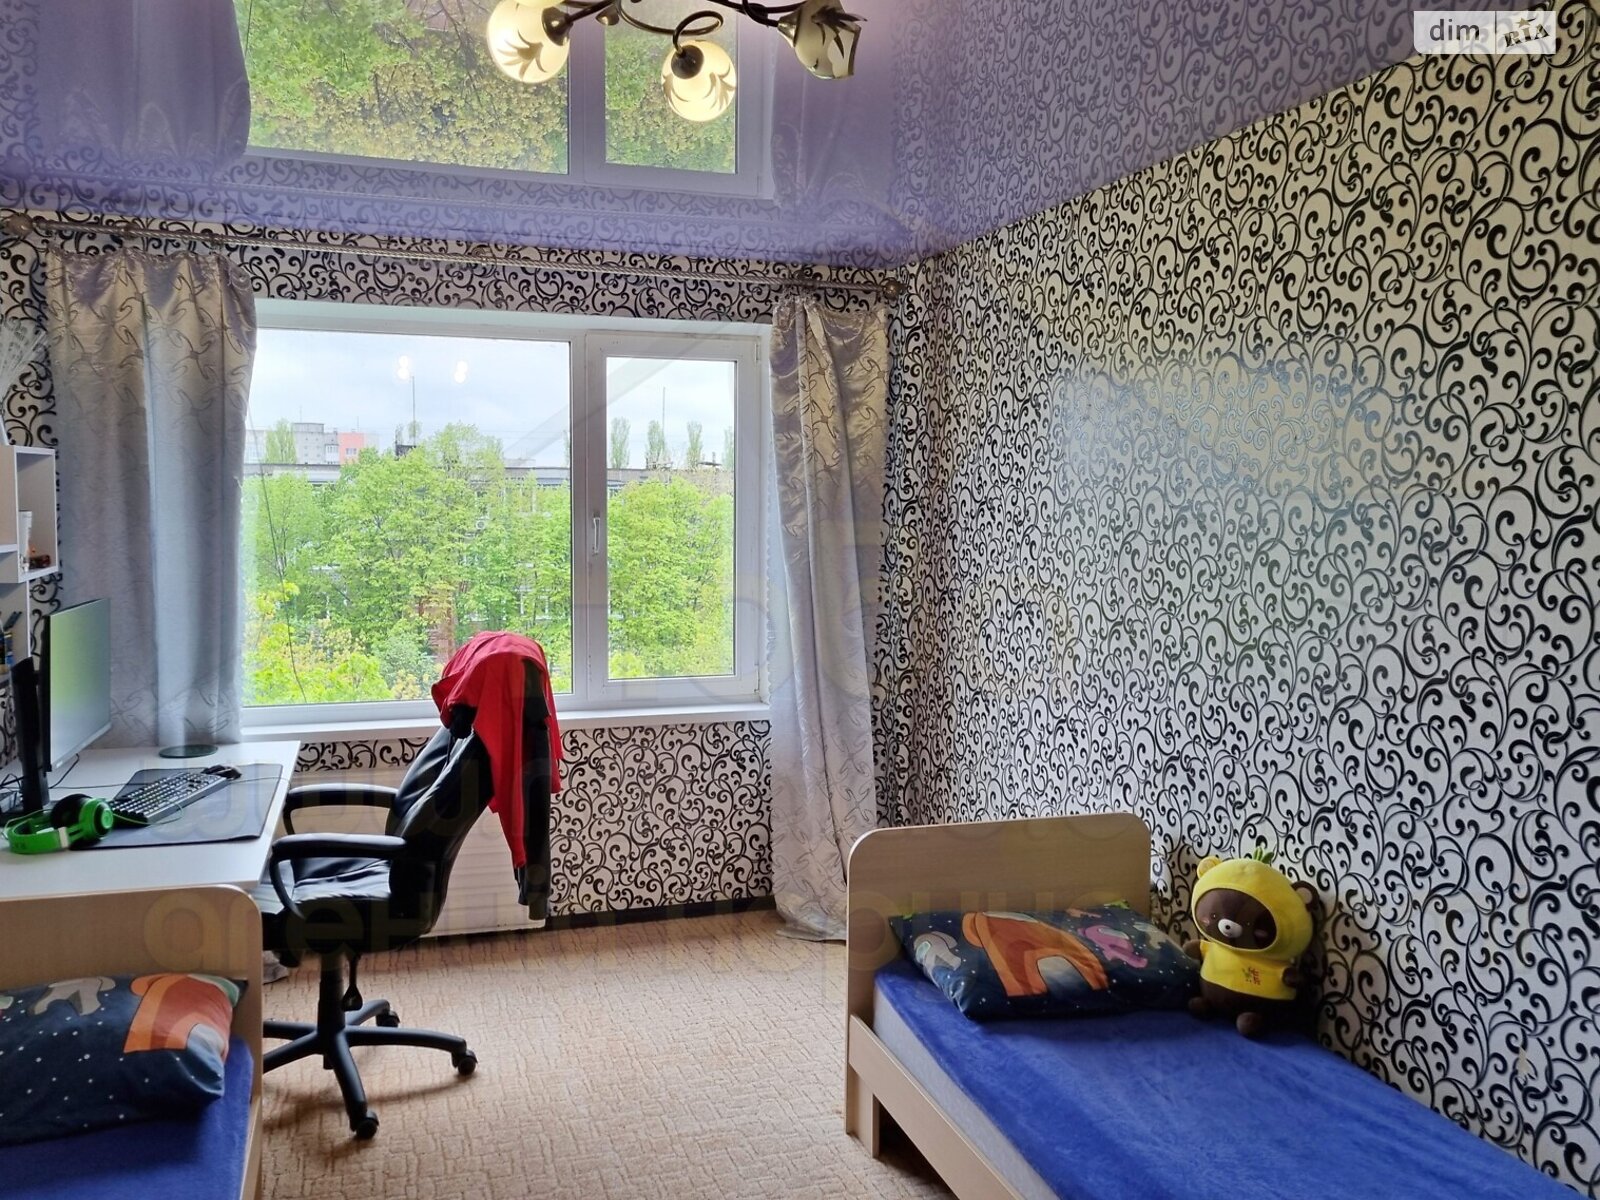 Продажа трехкомнатной квартиры в Чернигове, на ул. Доценко, район Деснянский фото 1